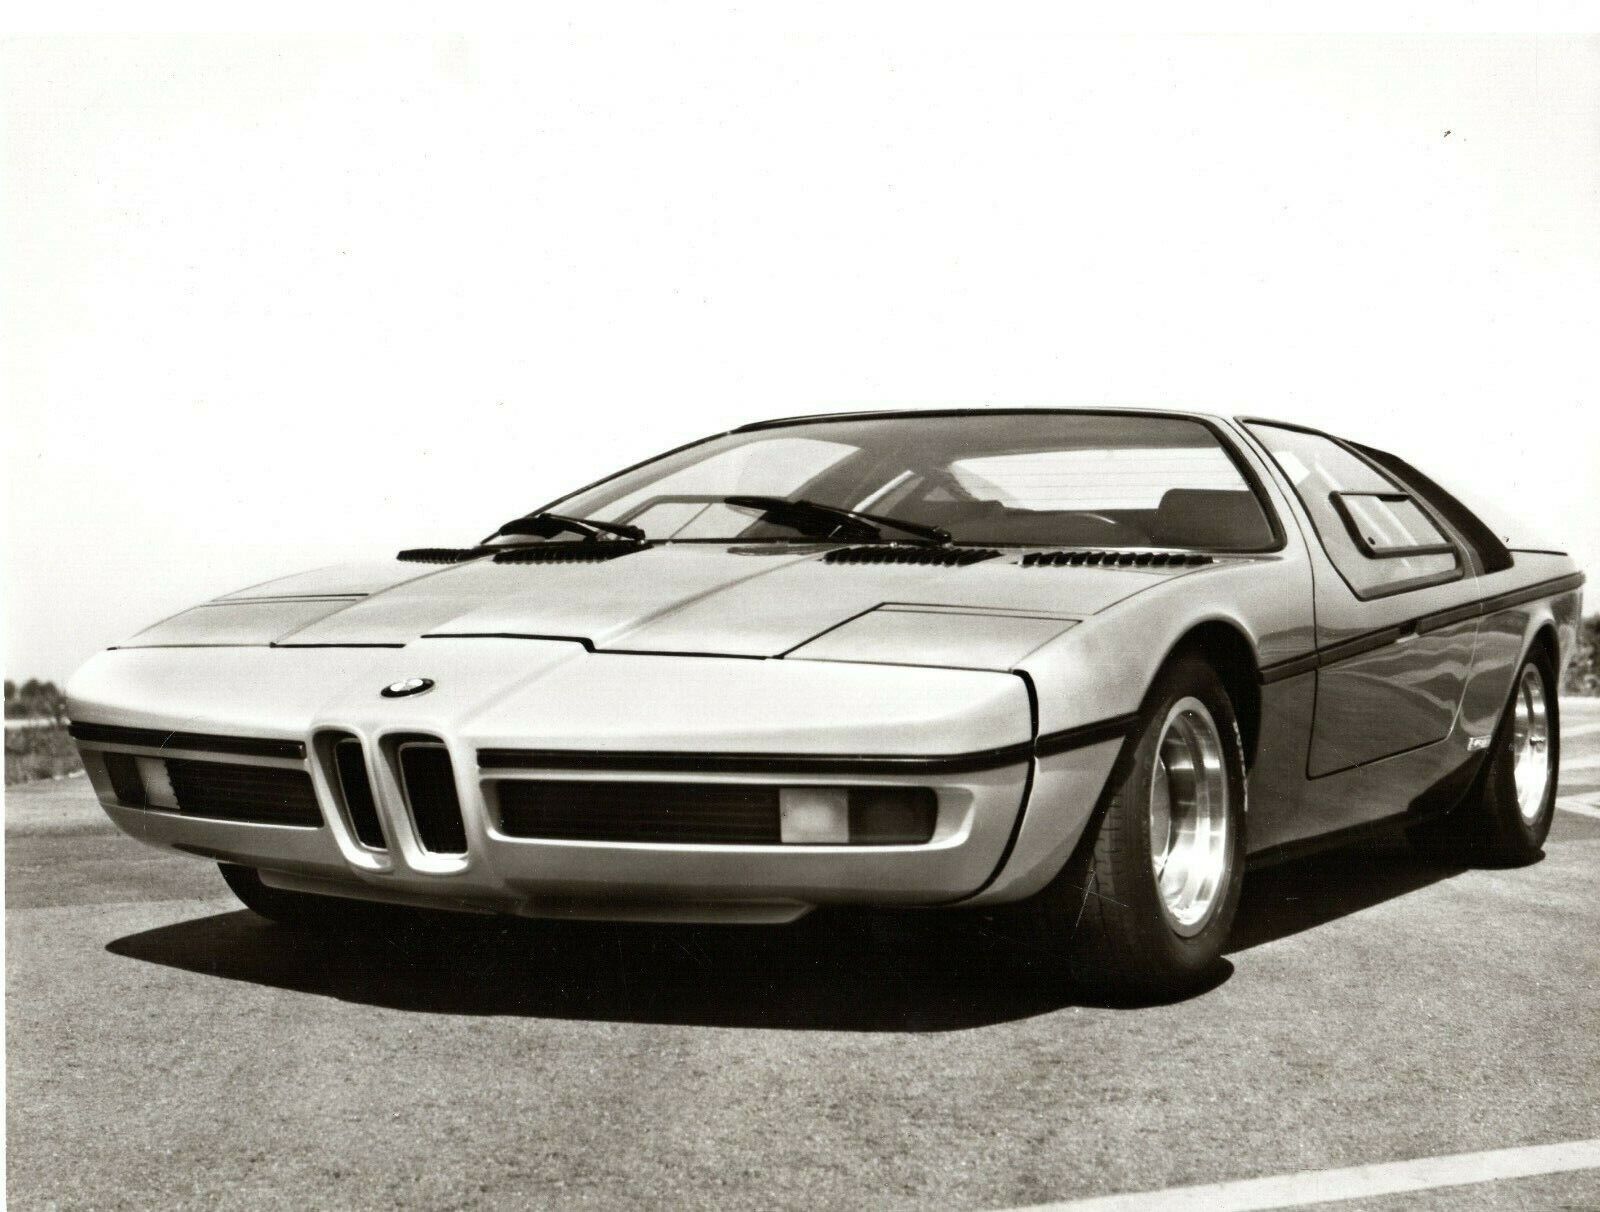 FUTURE (1977) Photo: BMW Turbo #1 (German Caption  (Future Report* Q